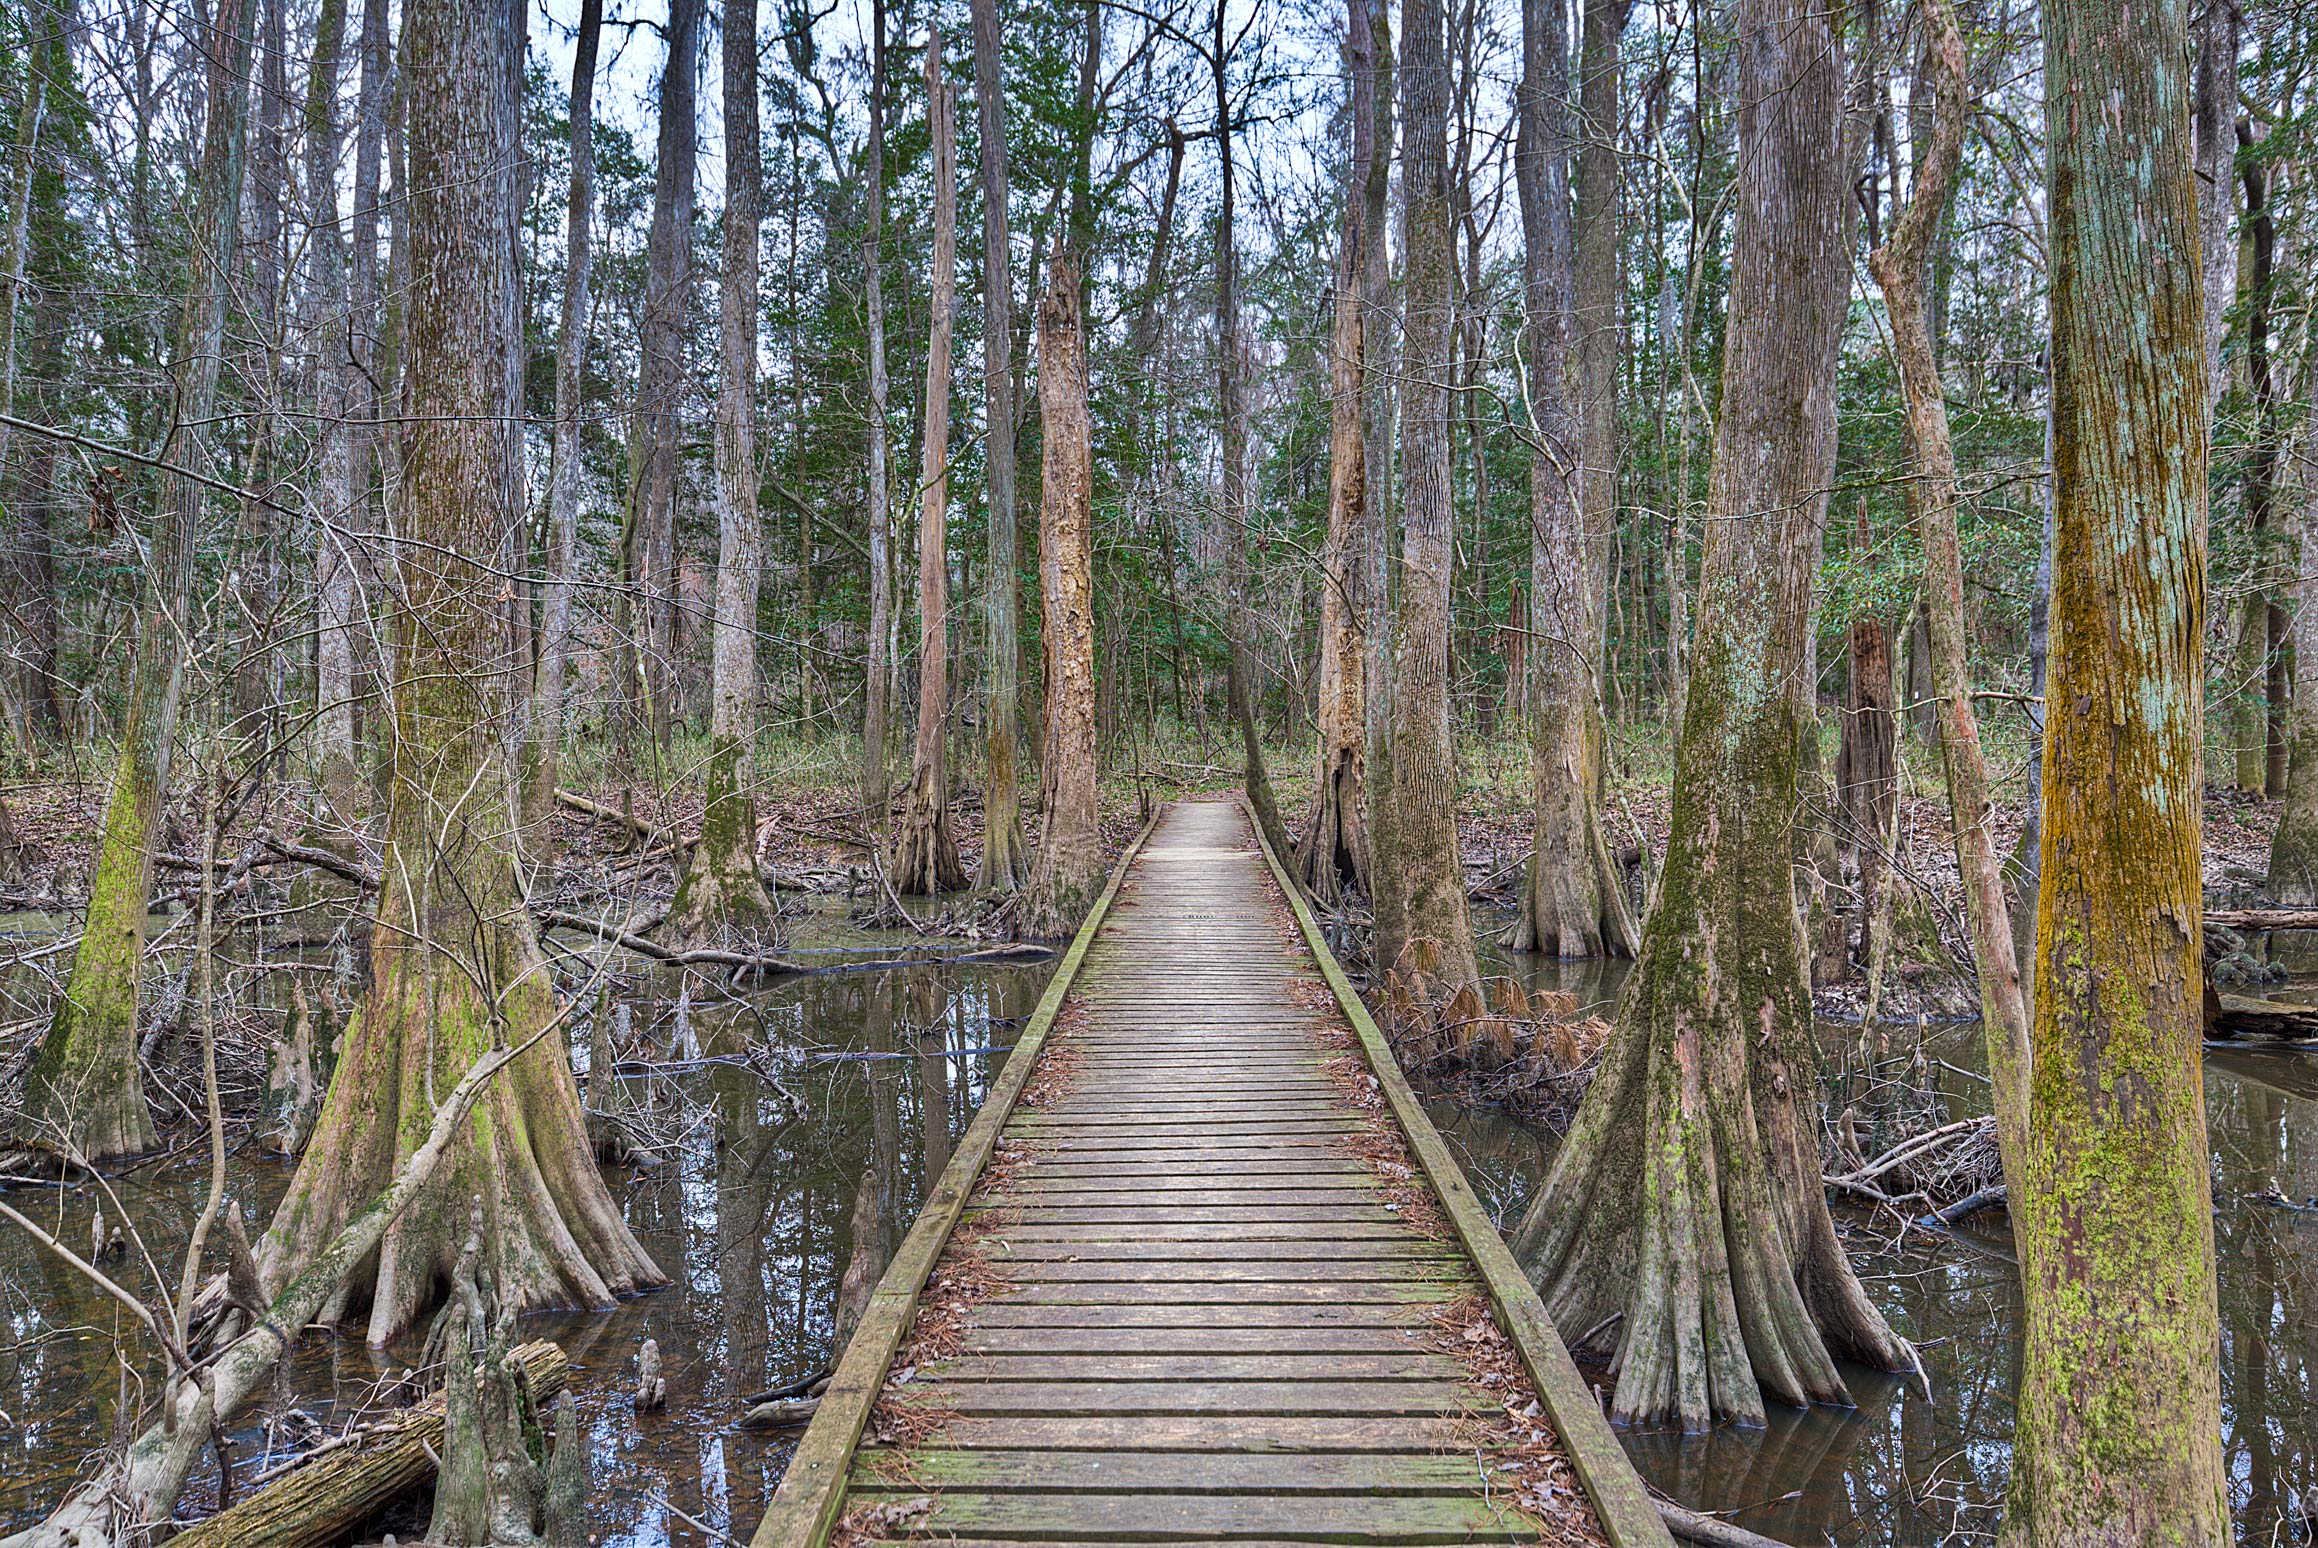 Boardwalk through the Swamp